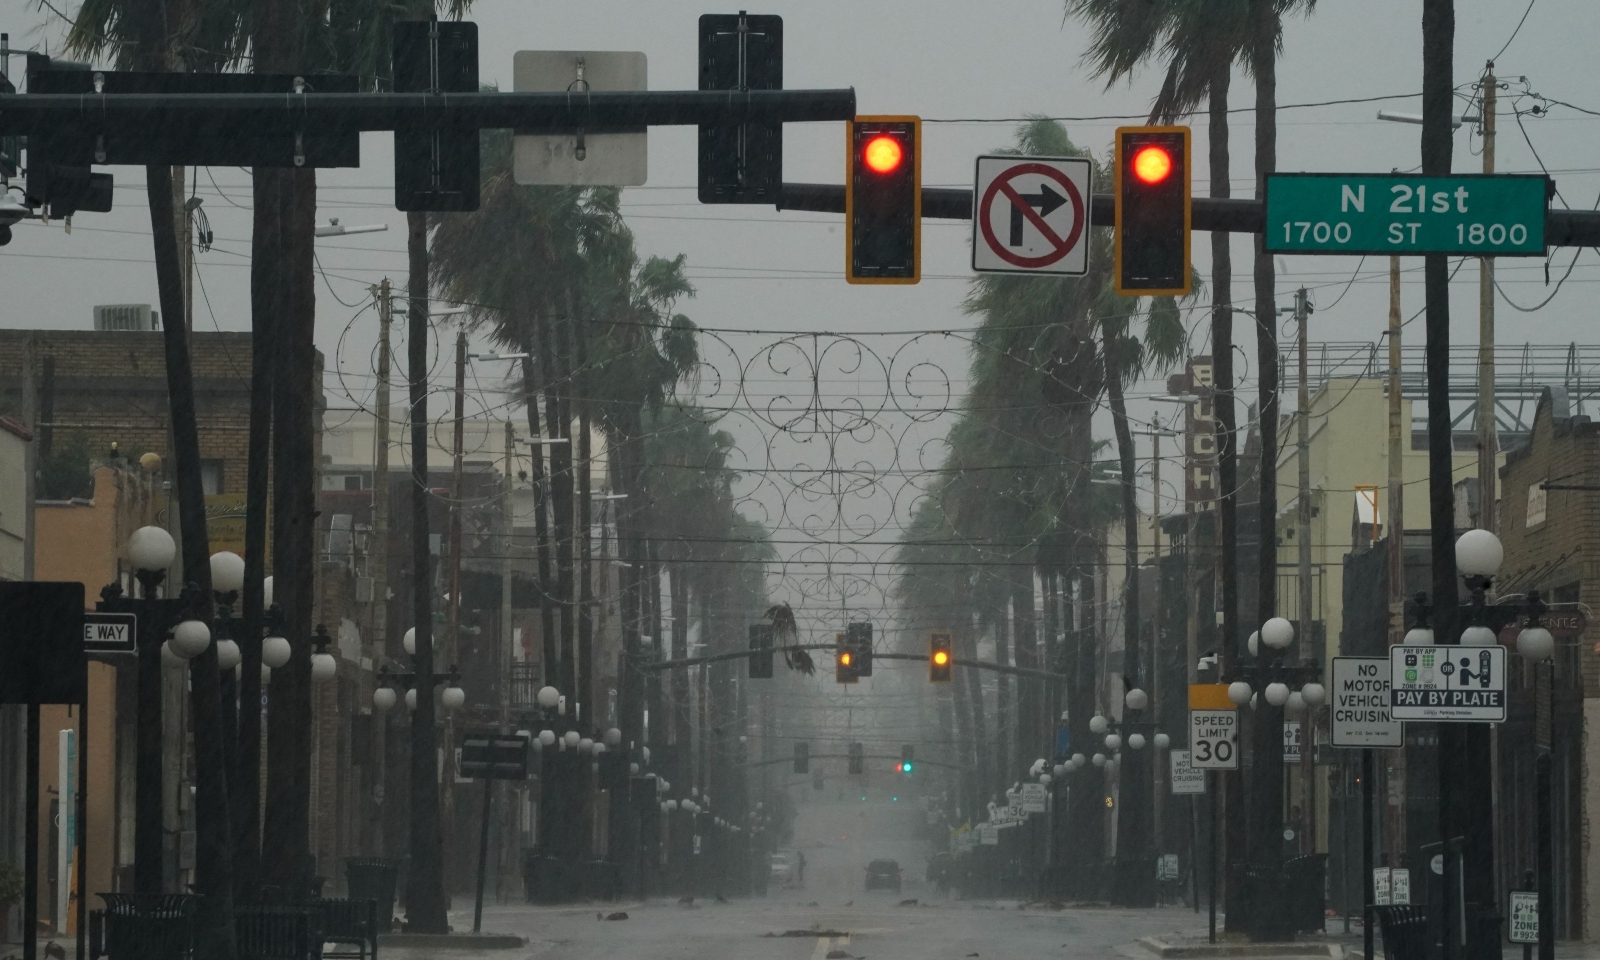 Wind and rain pick up in Tampa, Florida ahead of Hurricane Ian making landfall on September 28, 2022.